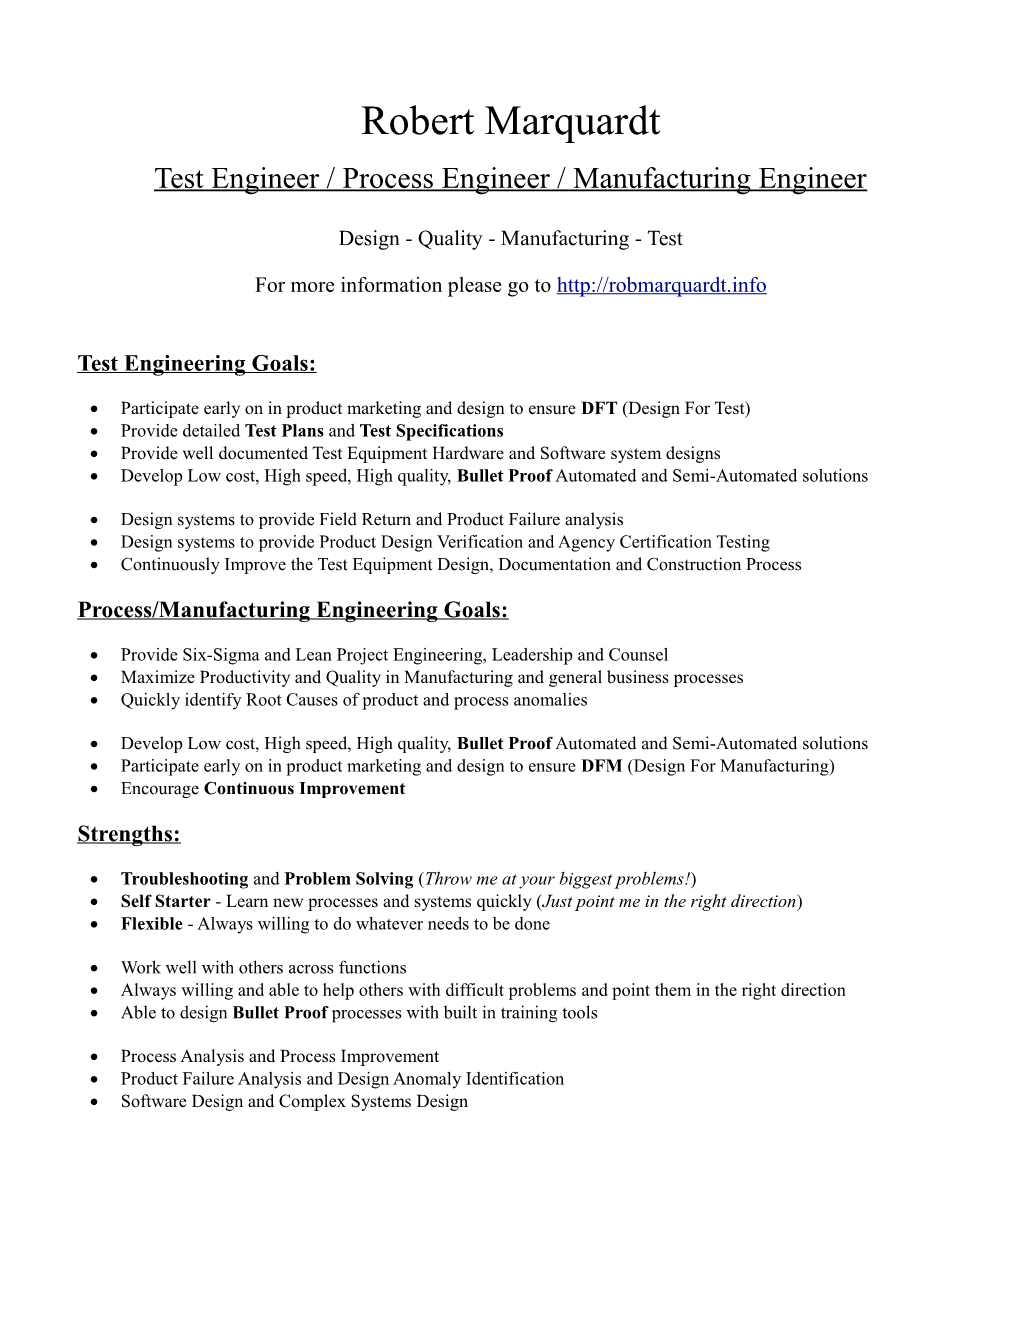 Test Engineer / Process Engineer / Manufacturing Engineer